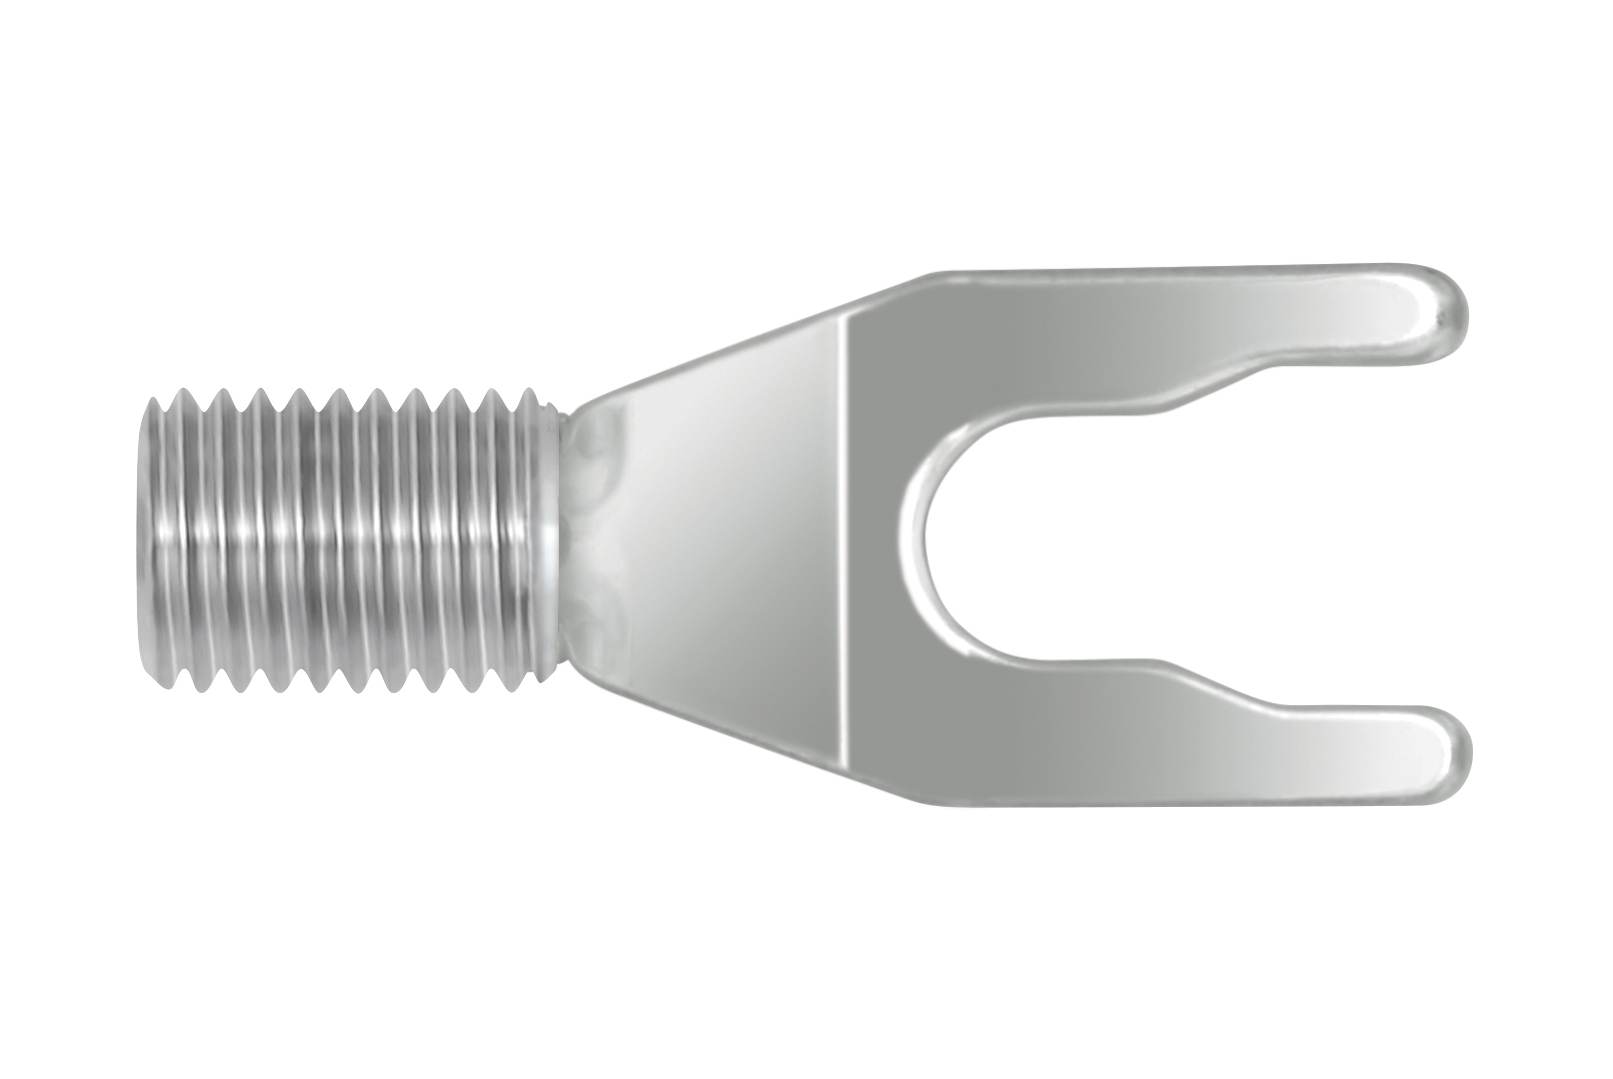 Разъёмы для акустического кабеля Wire World 16 silver spade for exchanging (SPDSEX16), 16 шт.